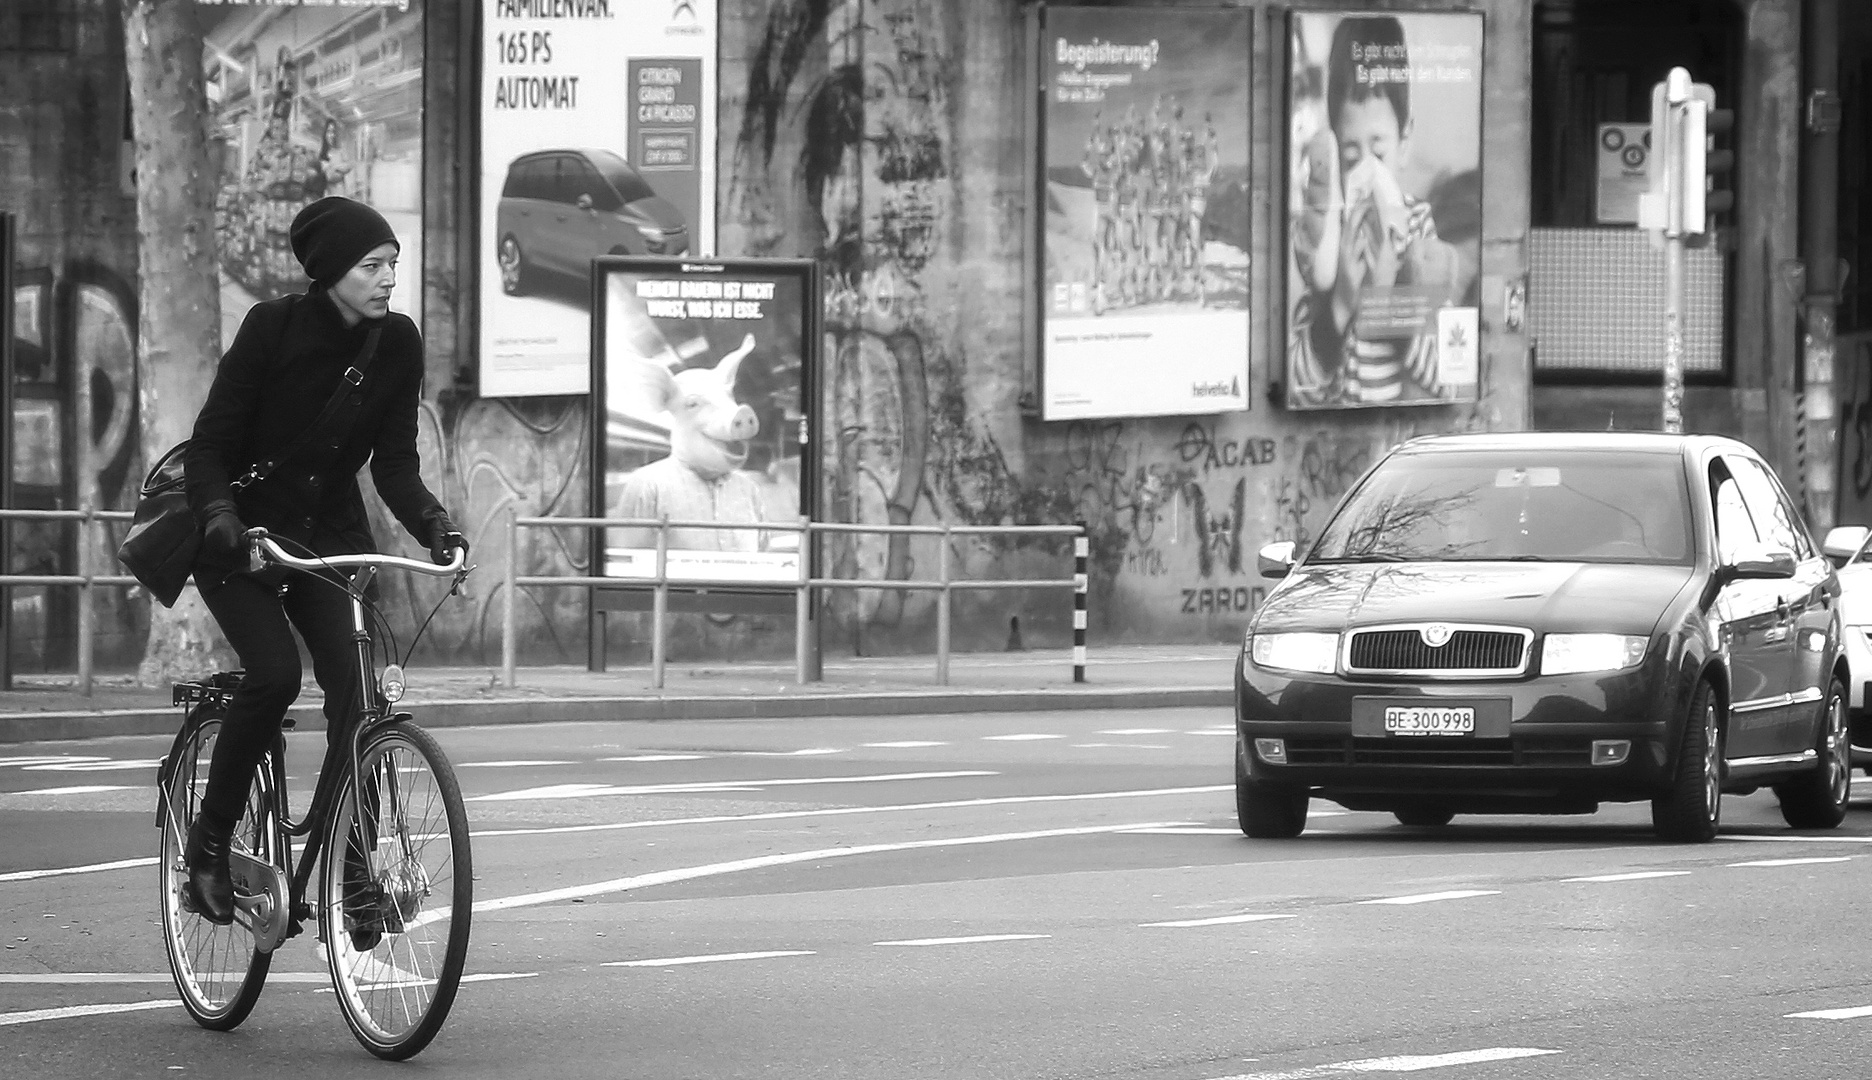 Urban cycling